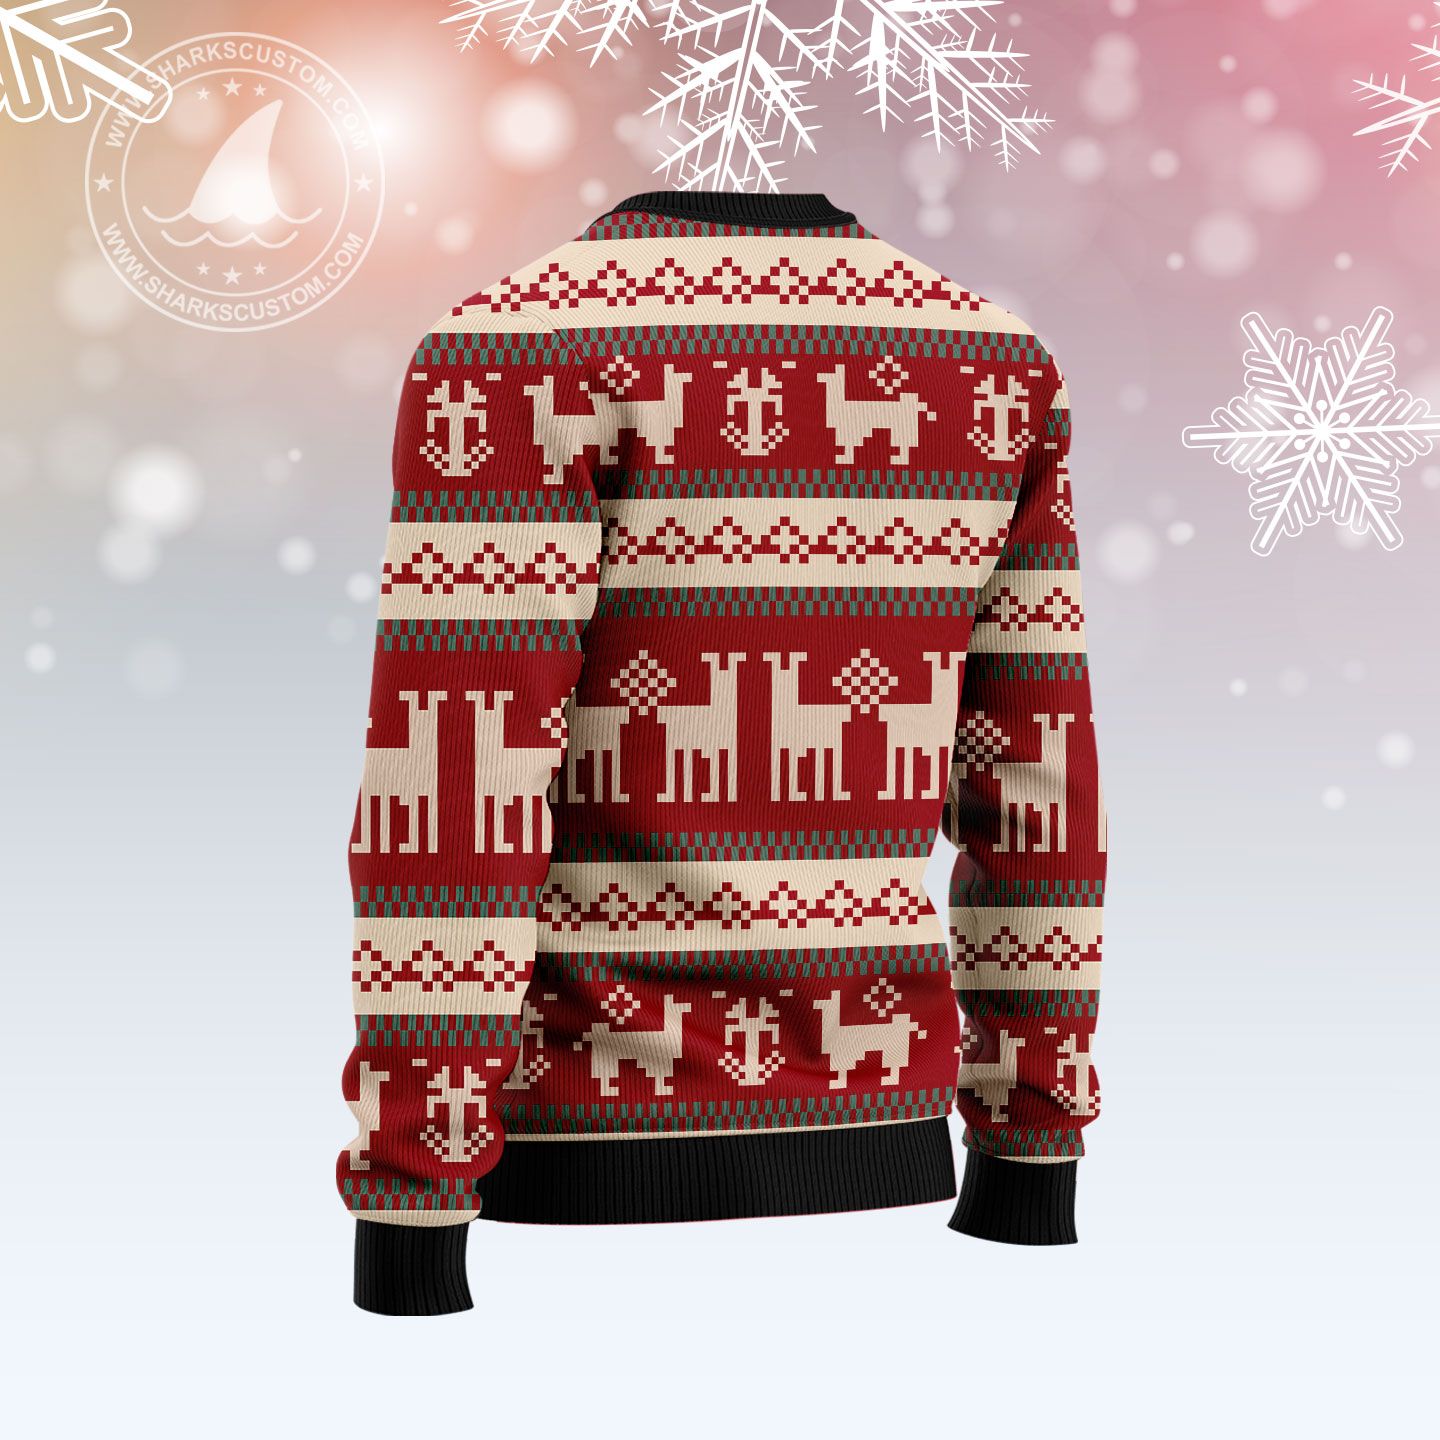 Llama Lalala T309 Ugly Christmas Sweater